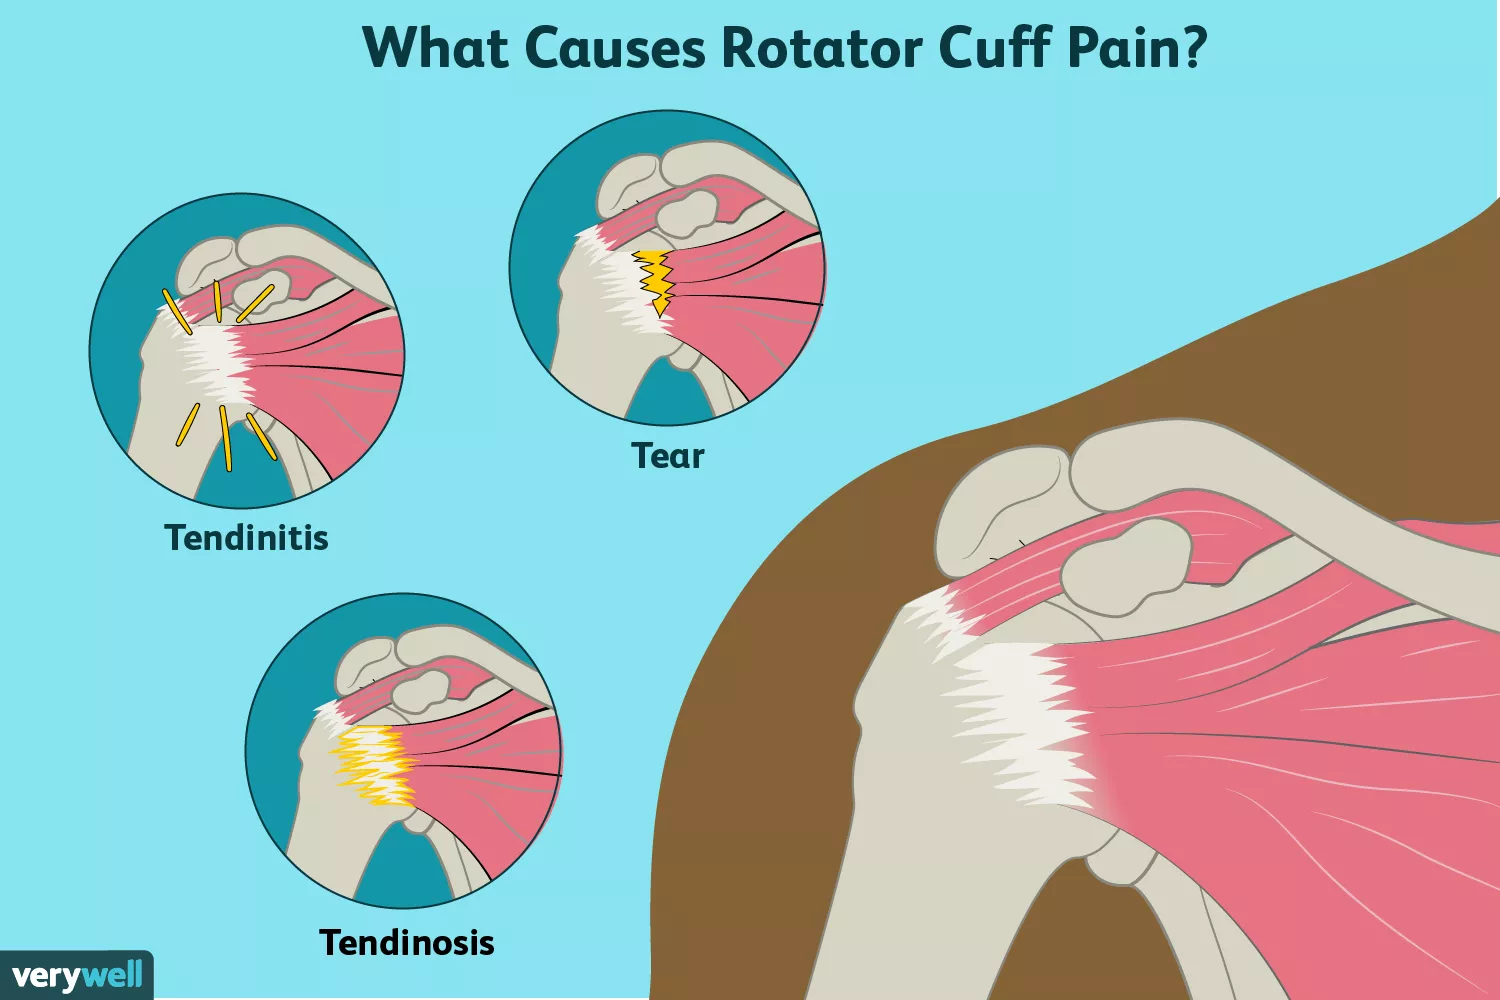 rotator cuff pain causes